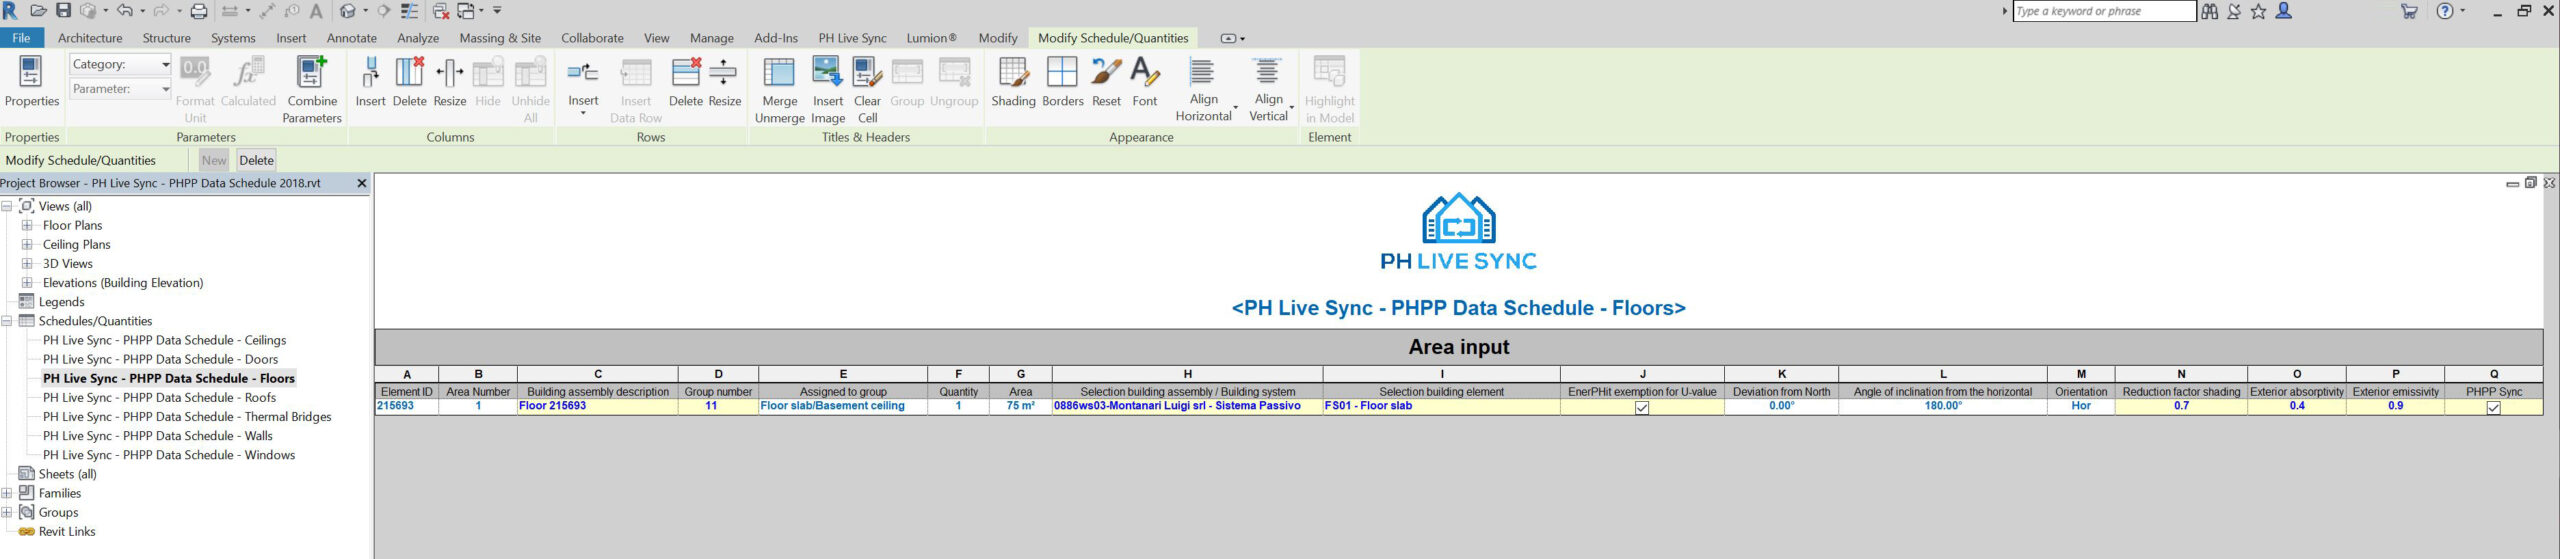 PH Live Sync - PHPP Data